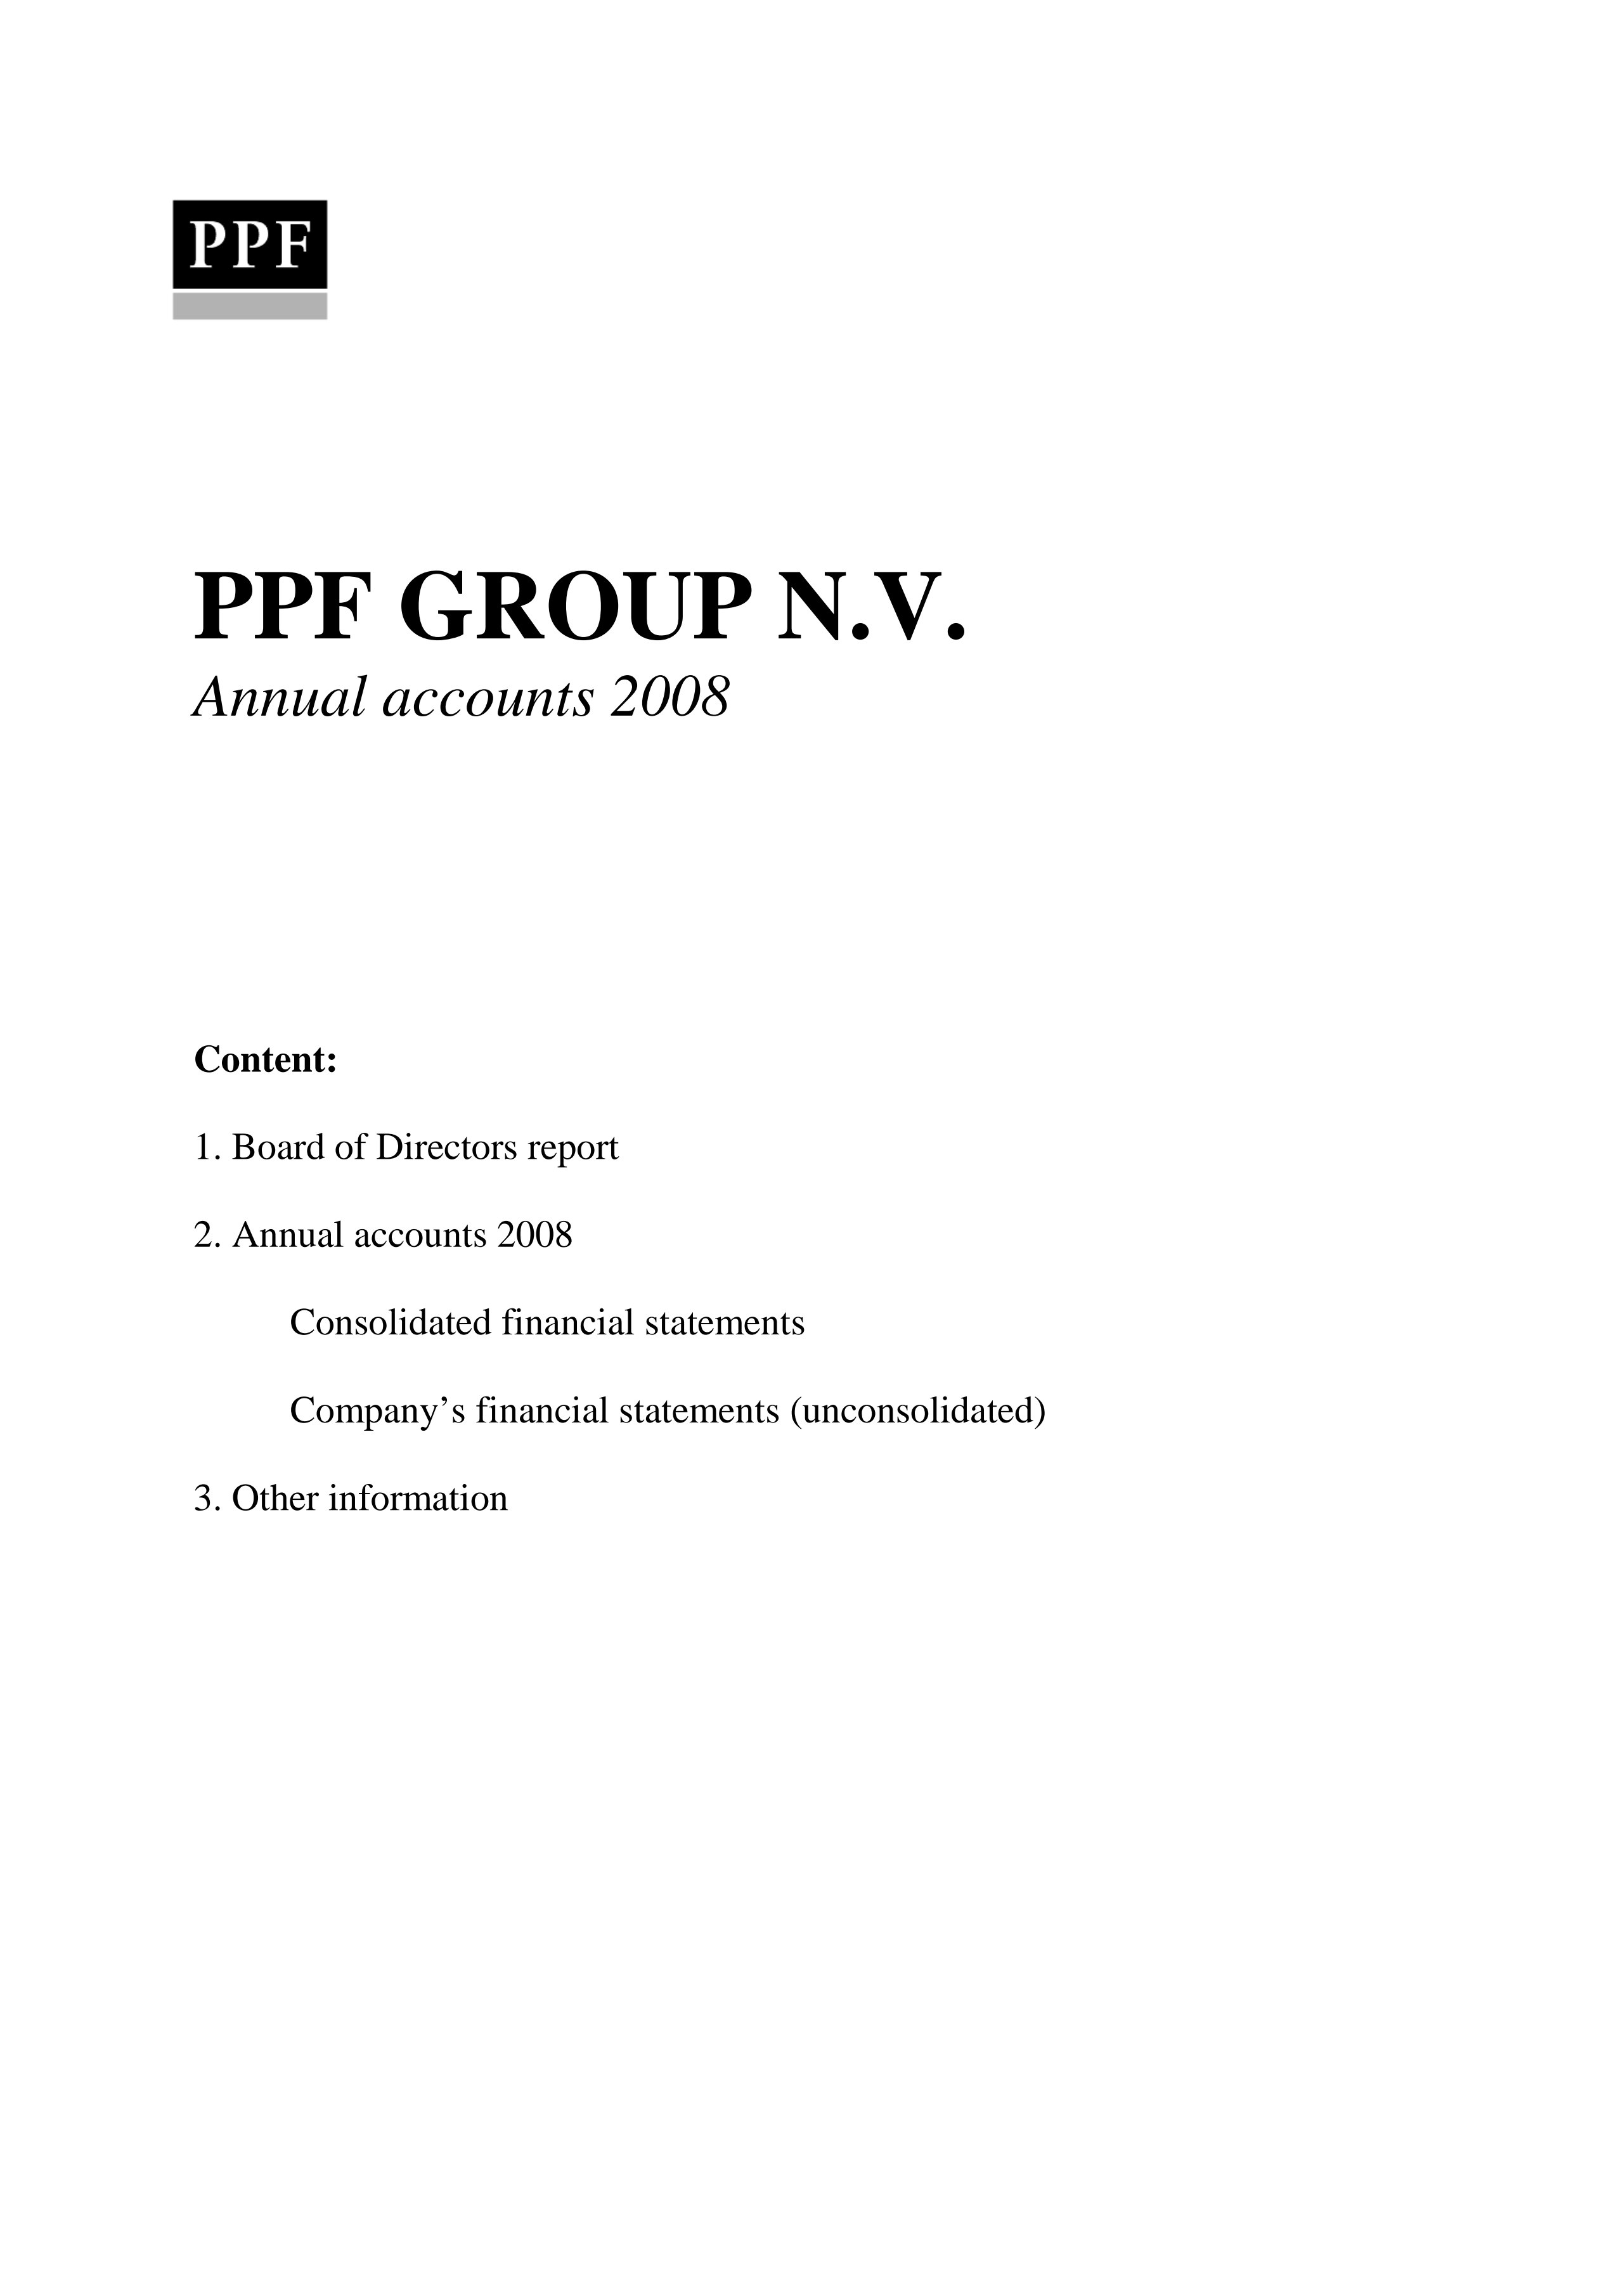 Annual Accounts PPF Group N.V. 2008 (28/6/2008)